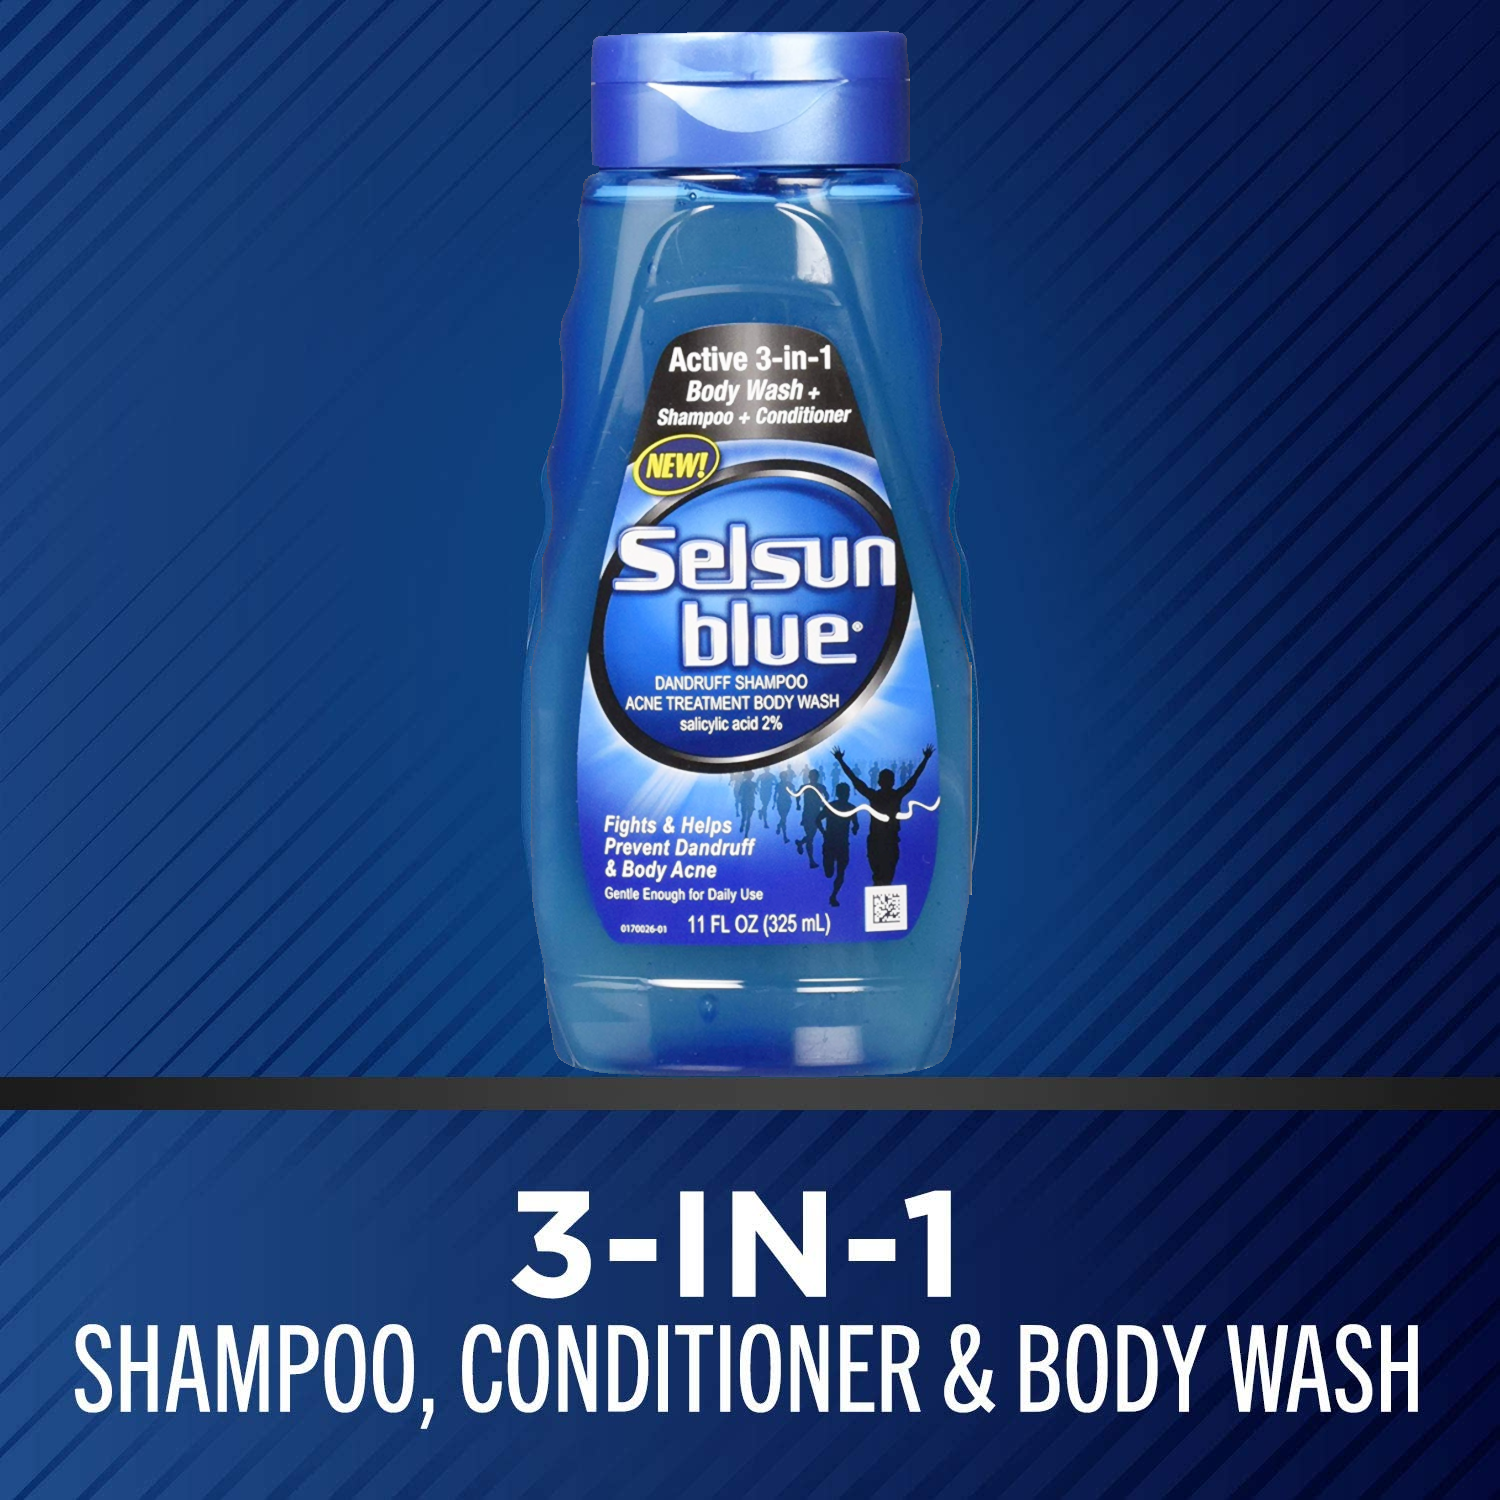 Selsun Blue Active 3-in-1 Dandruff Shampoo, 1 Pound